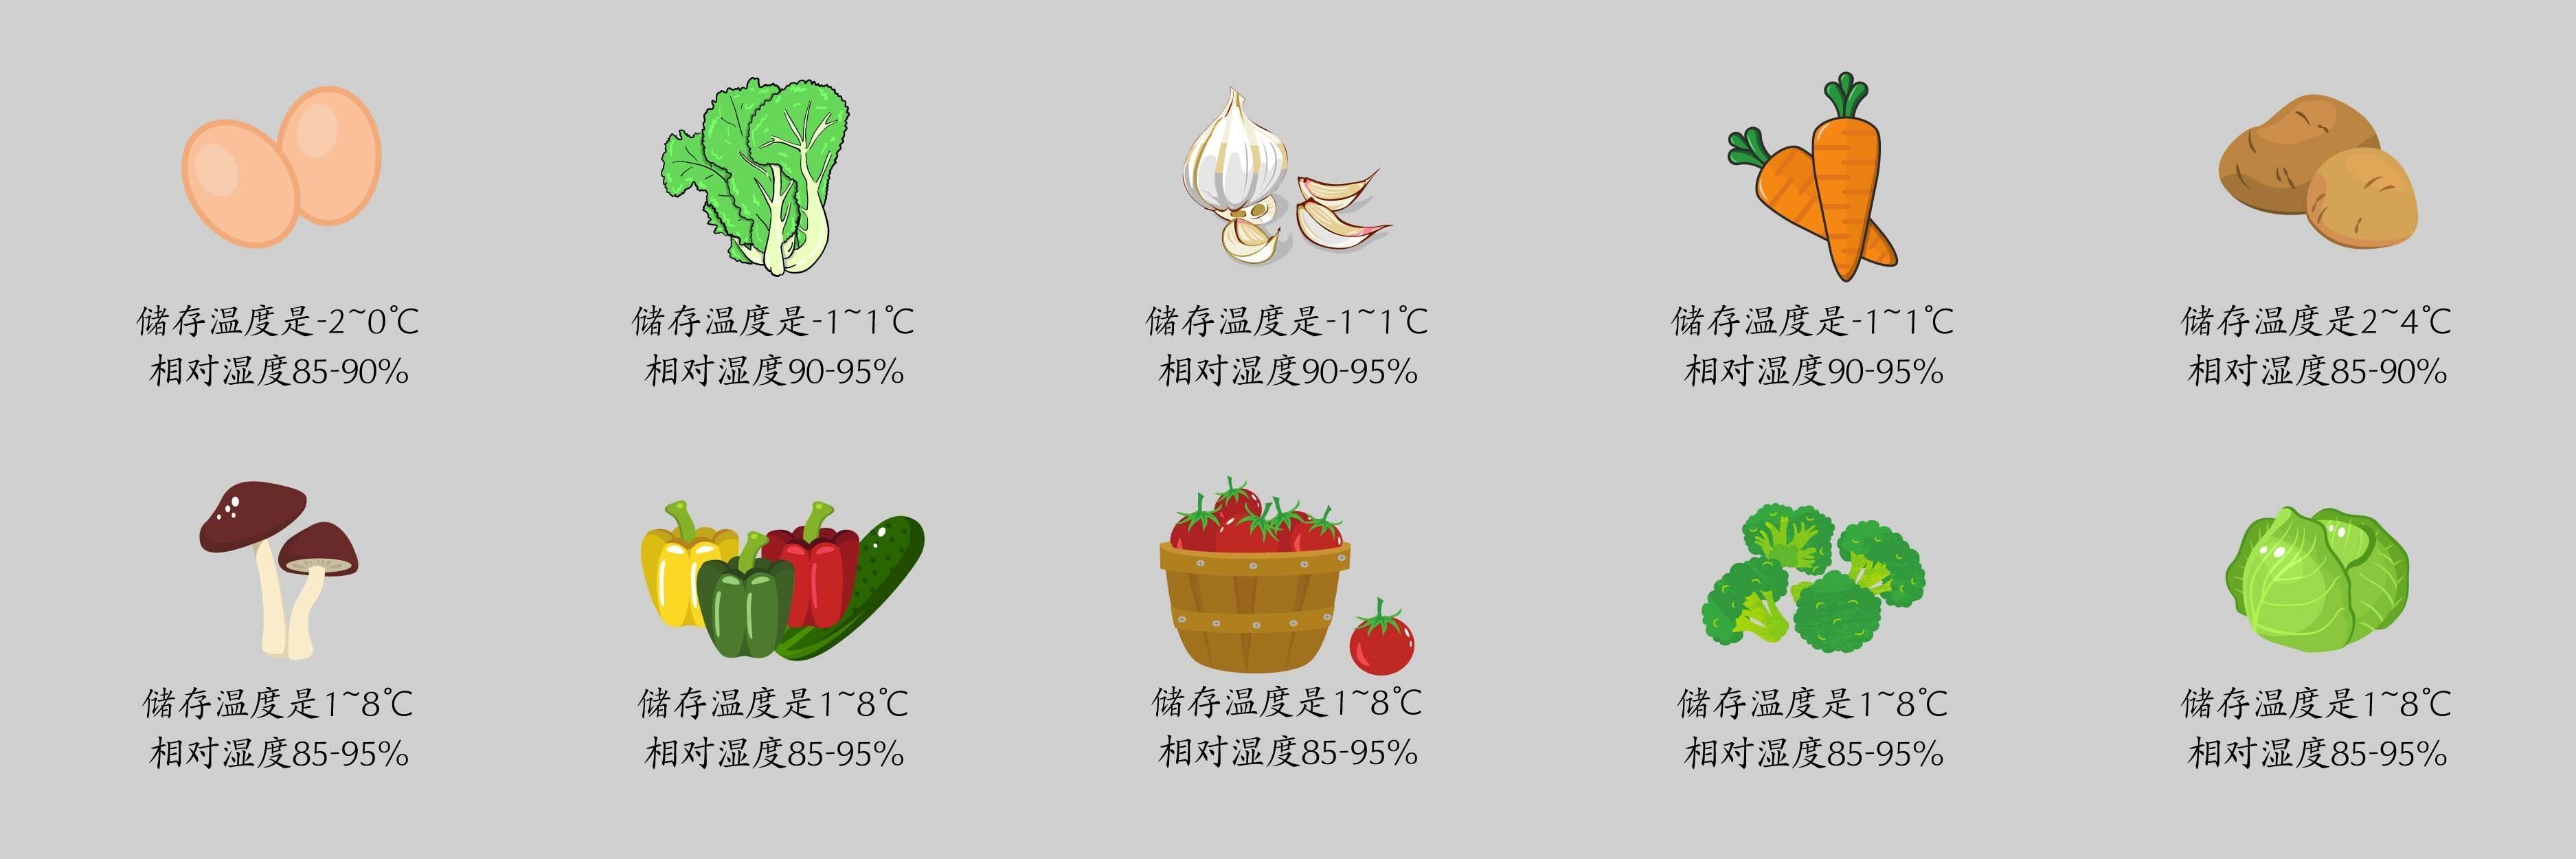 Dachang-Vegetable-freezer-icon